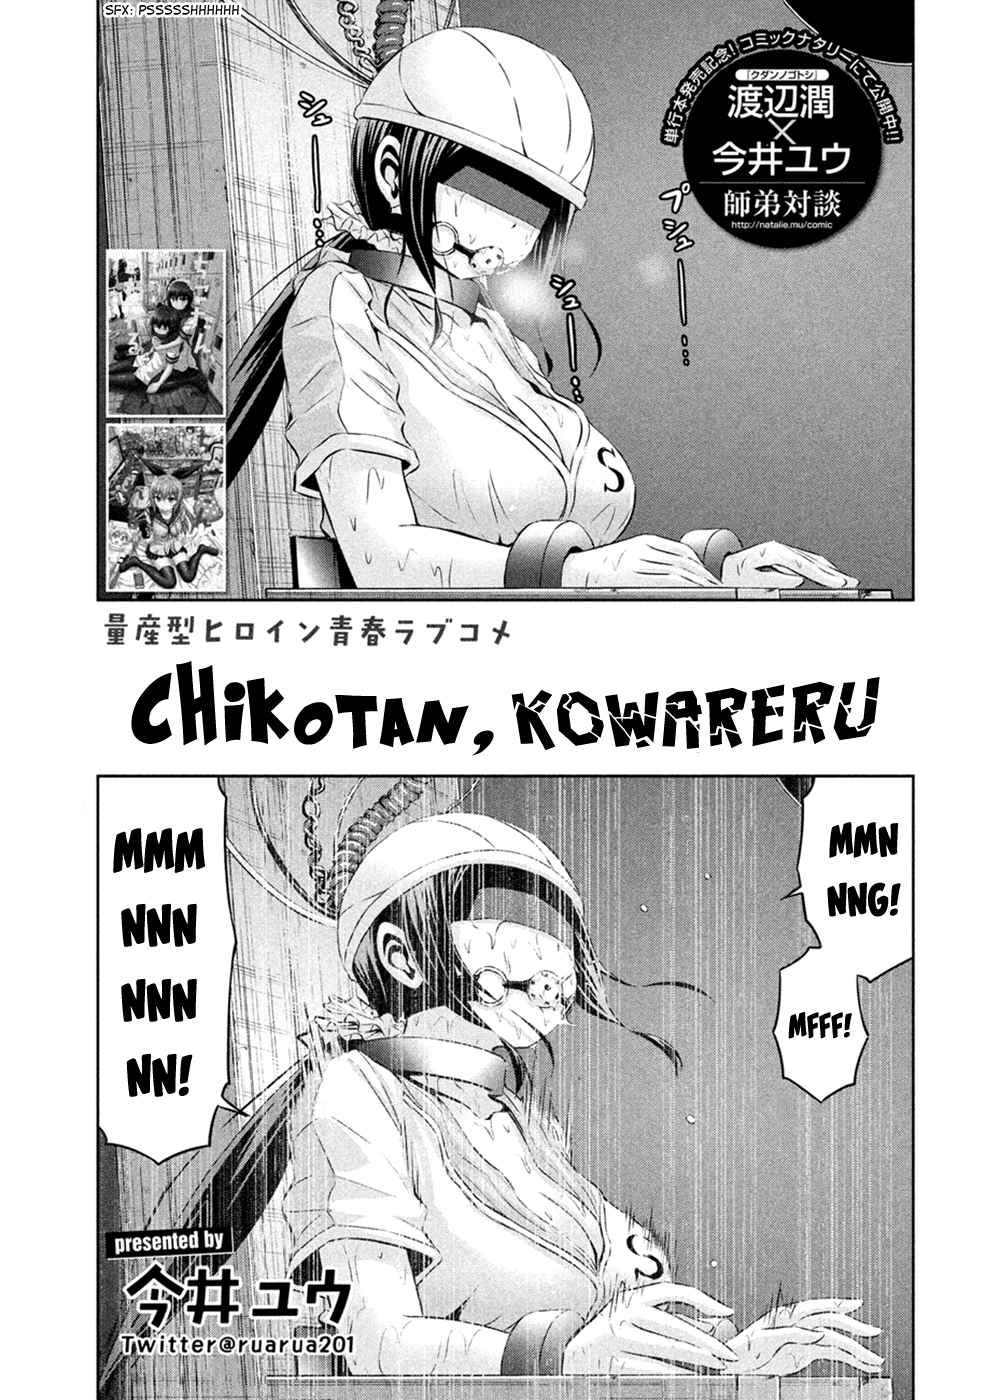 Chikotan, Kowareru Vol.3 Ch.24